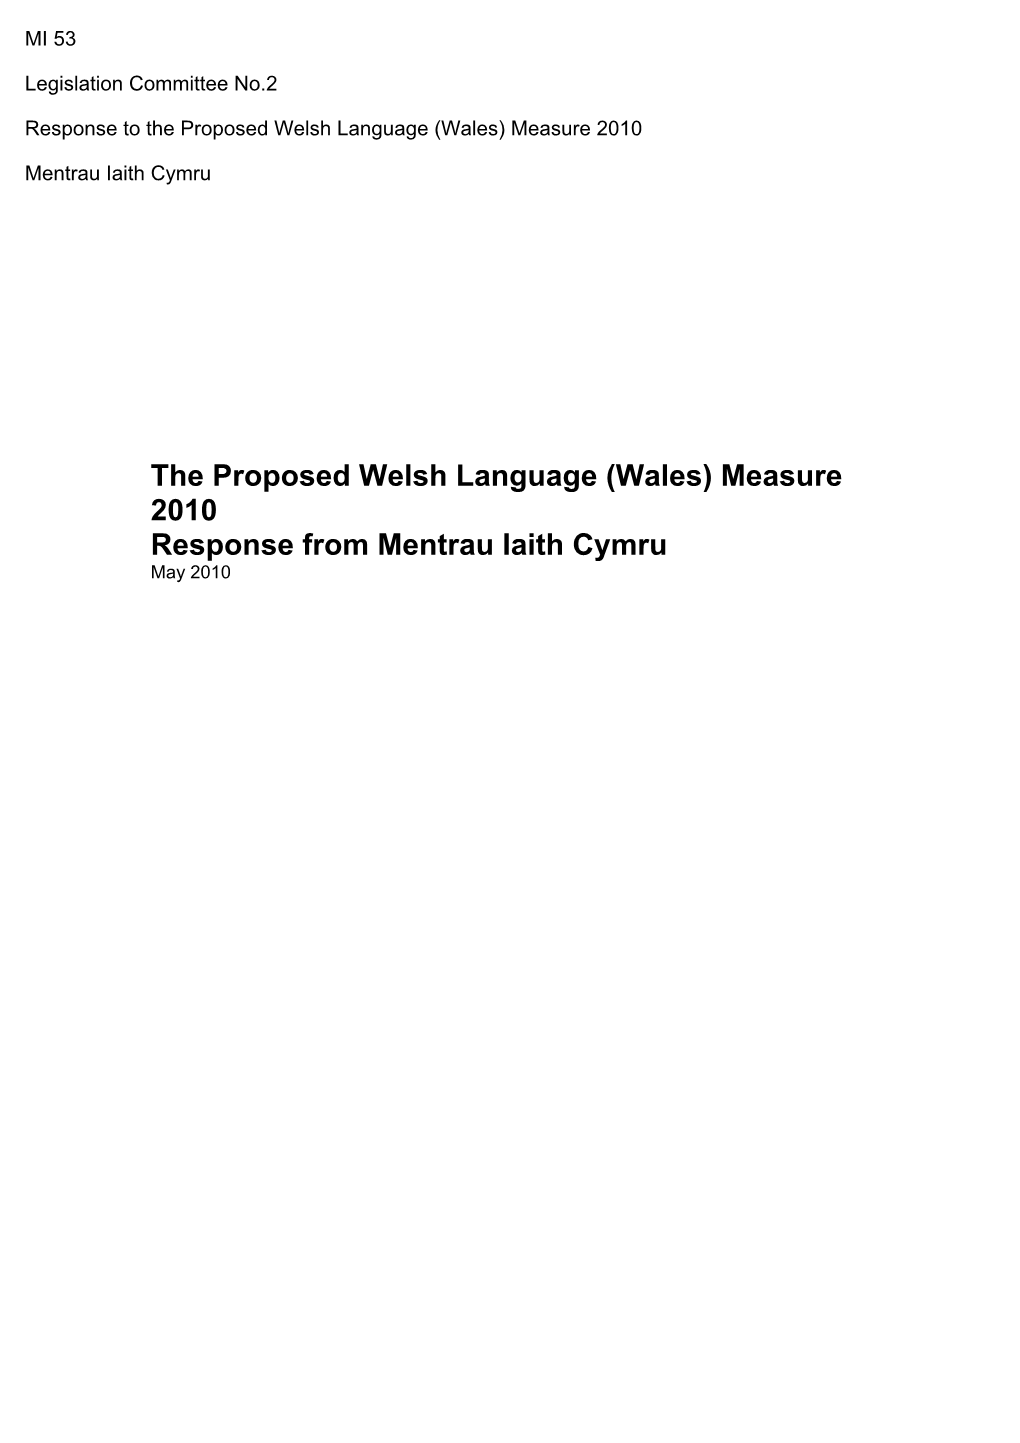 The Proposed Welsh Language (Wales) Measure 2010 Response from Mentrau Iaith Cymru May 2010 Mentrau Iaith Cymru